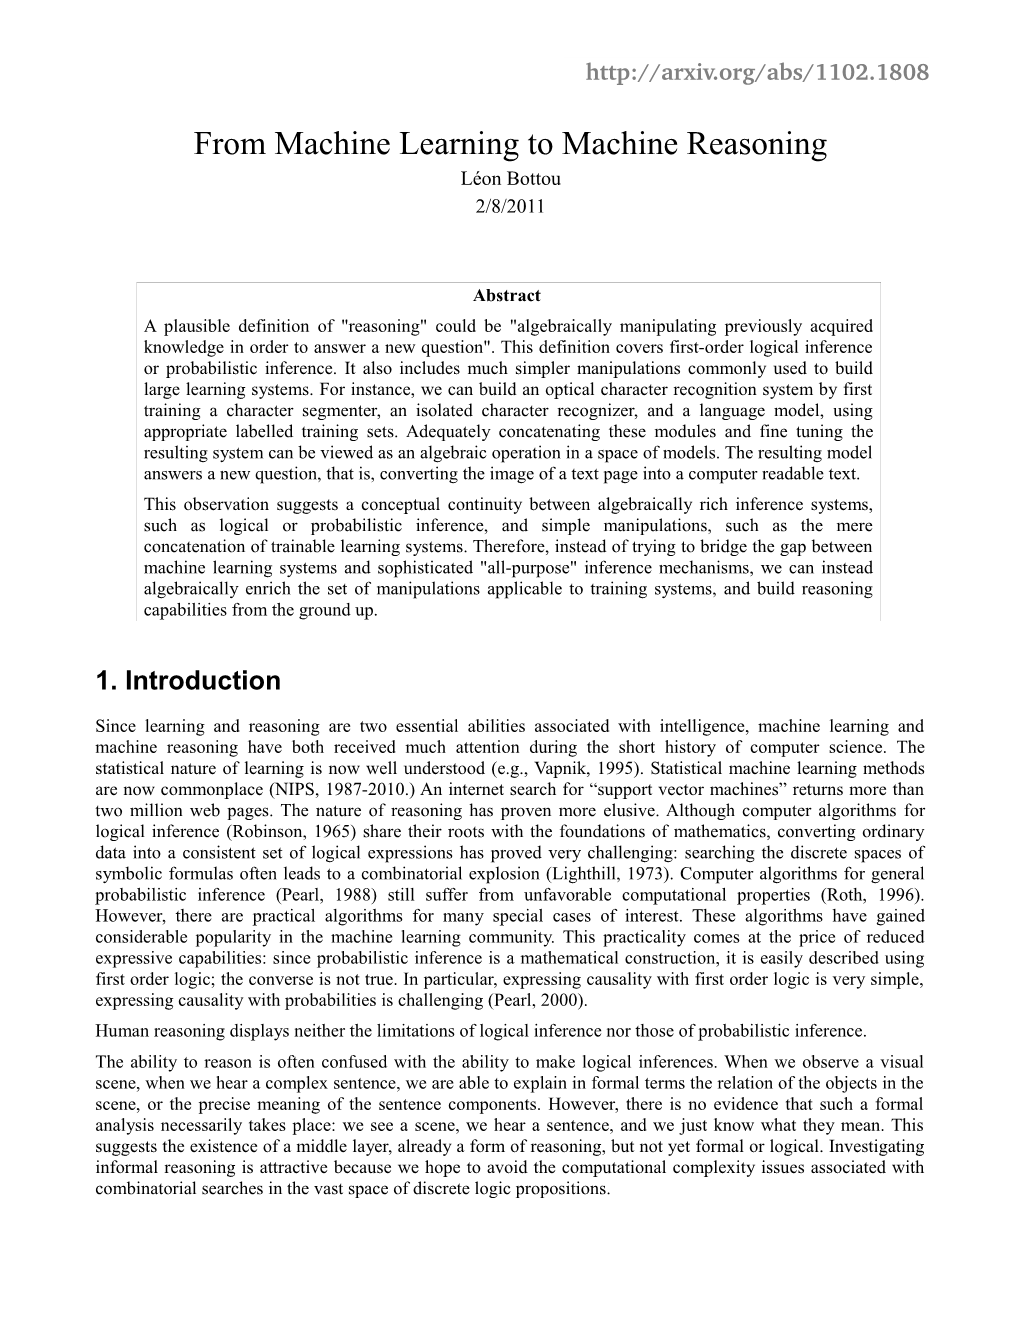 From Machine Learning to Machine Reasoning Léon Bottou 2/8/2011